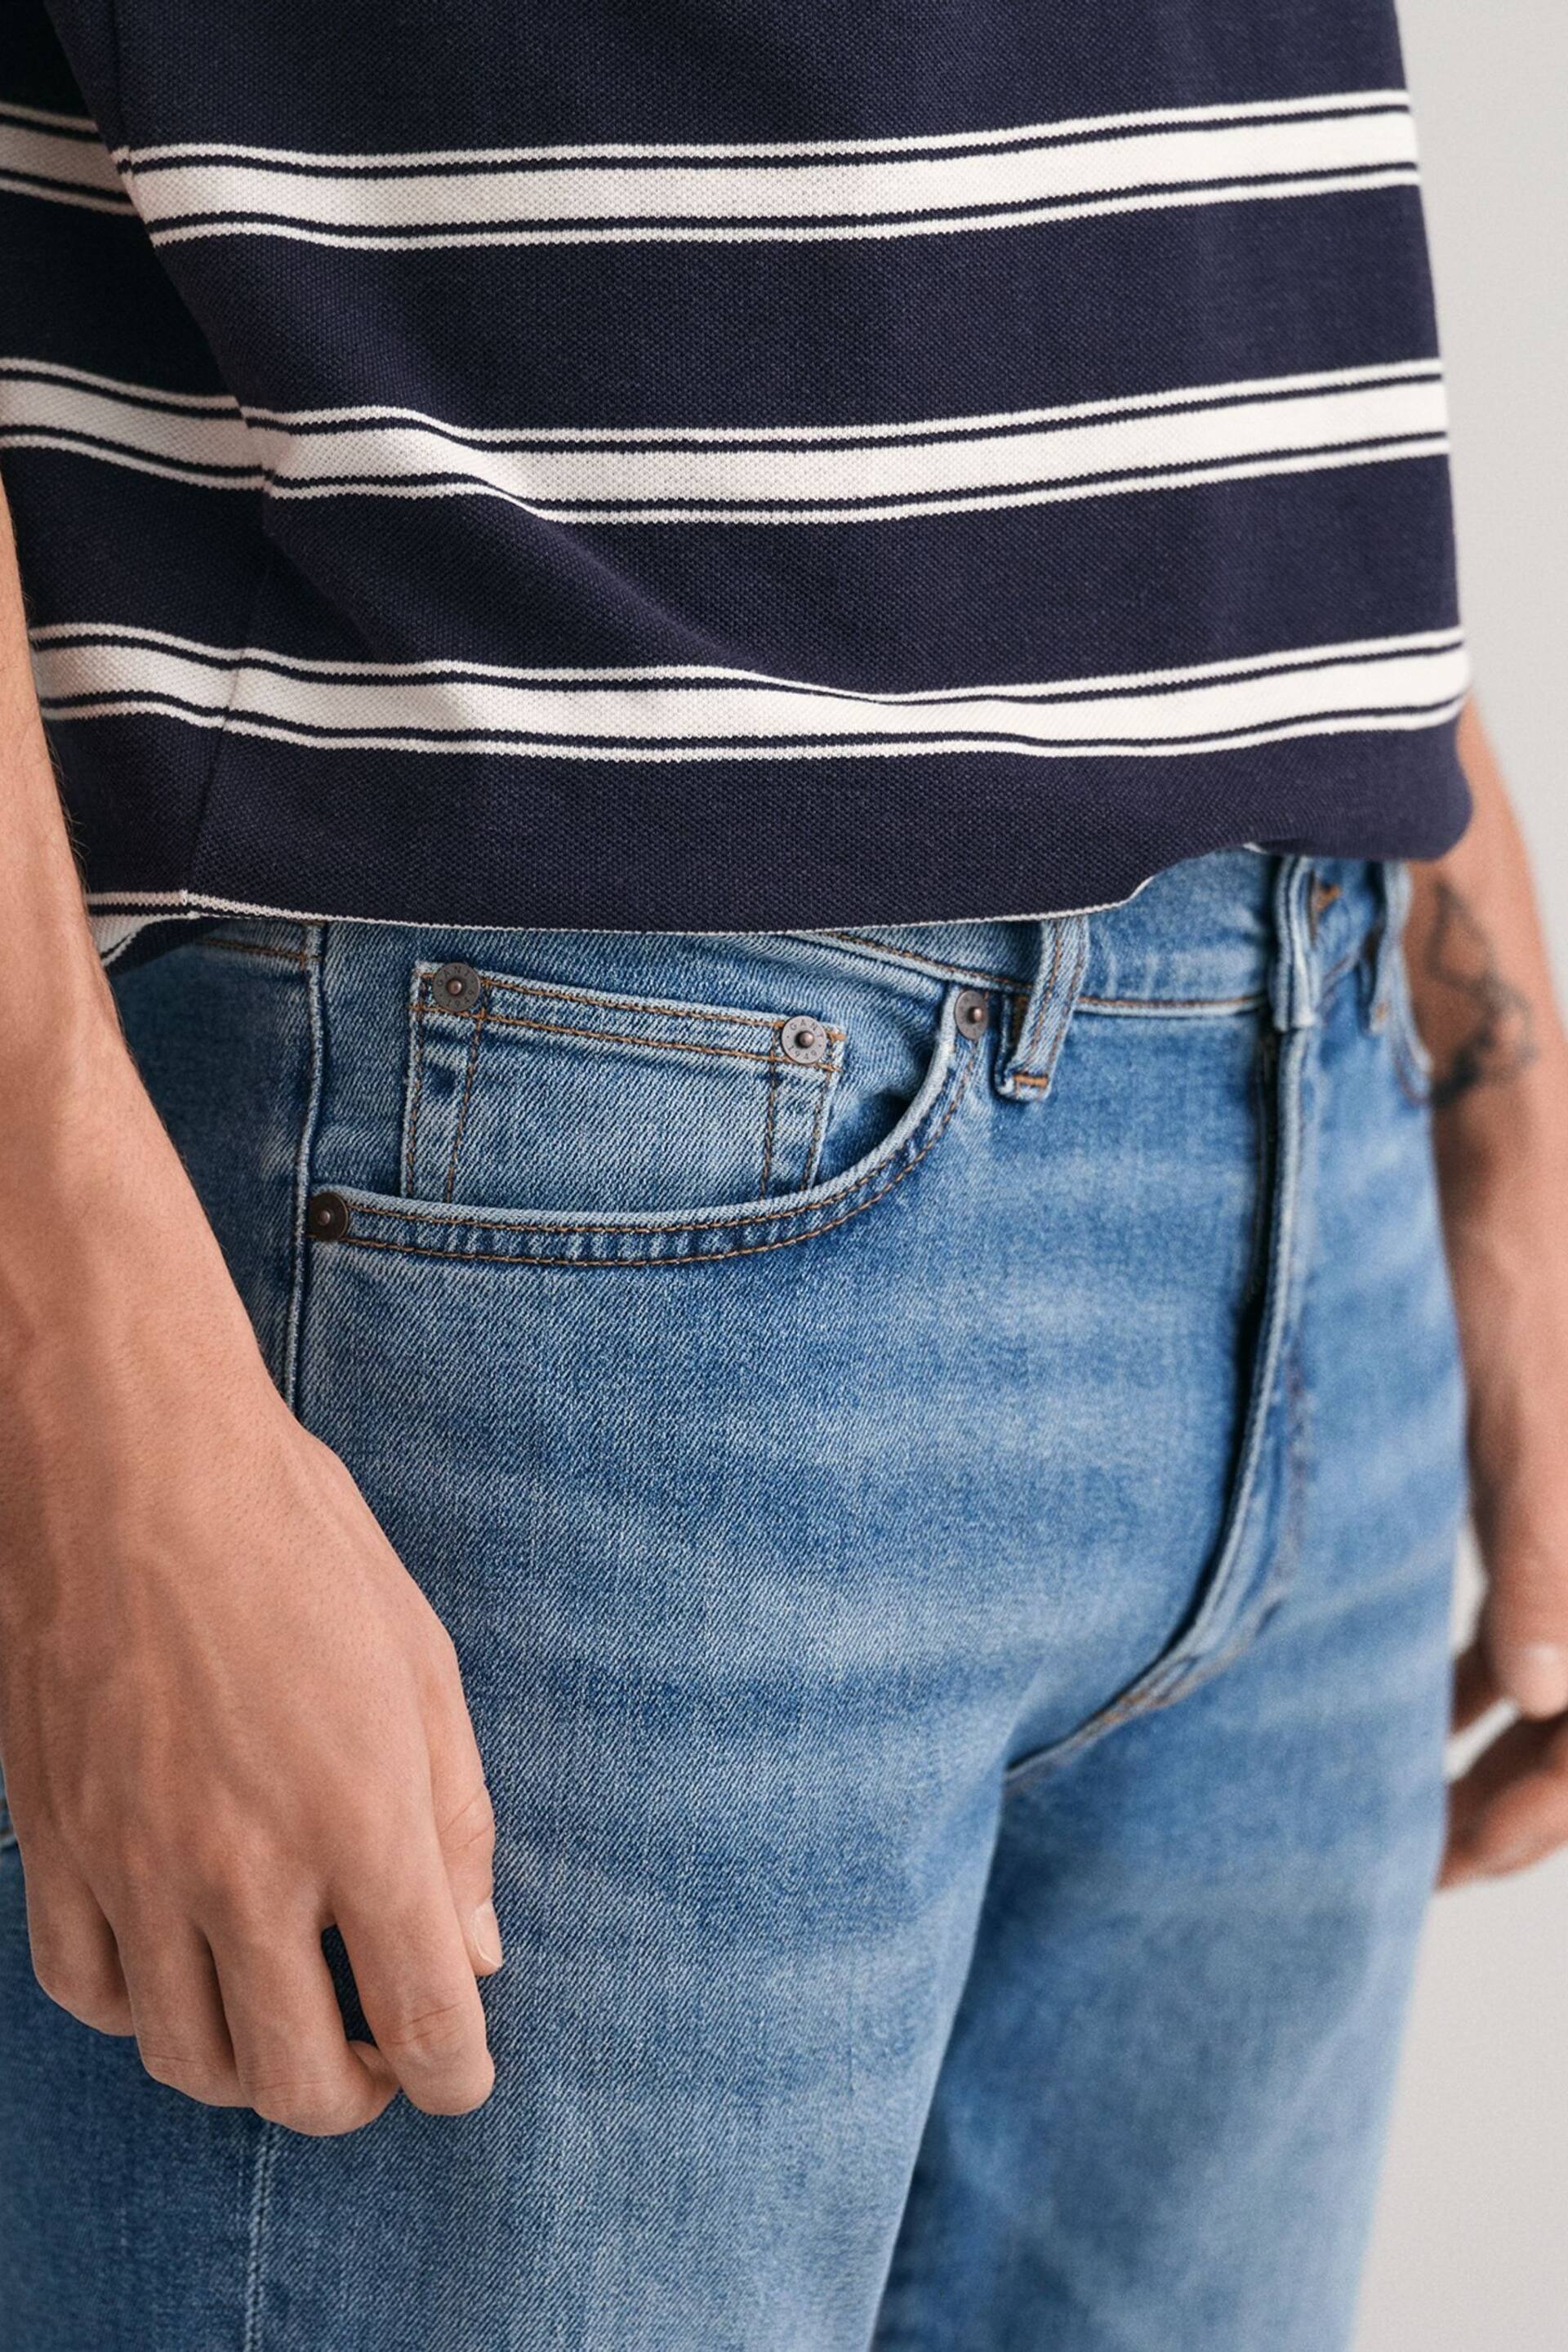 GANT Worn In Slim Fit Jeans - Image 4 of 5